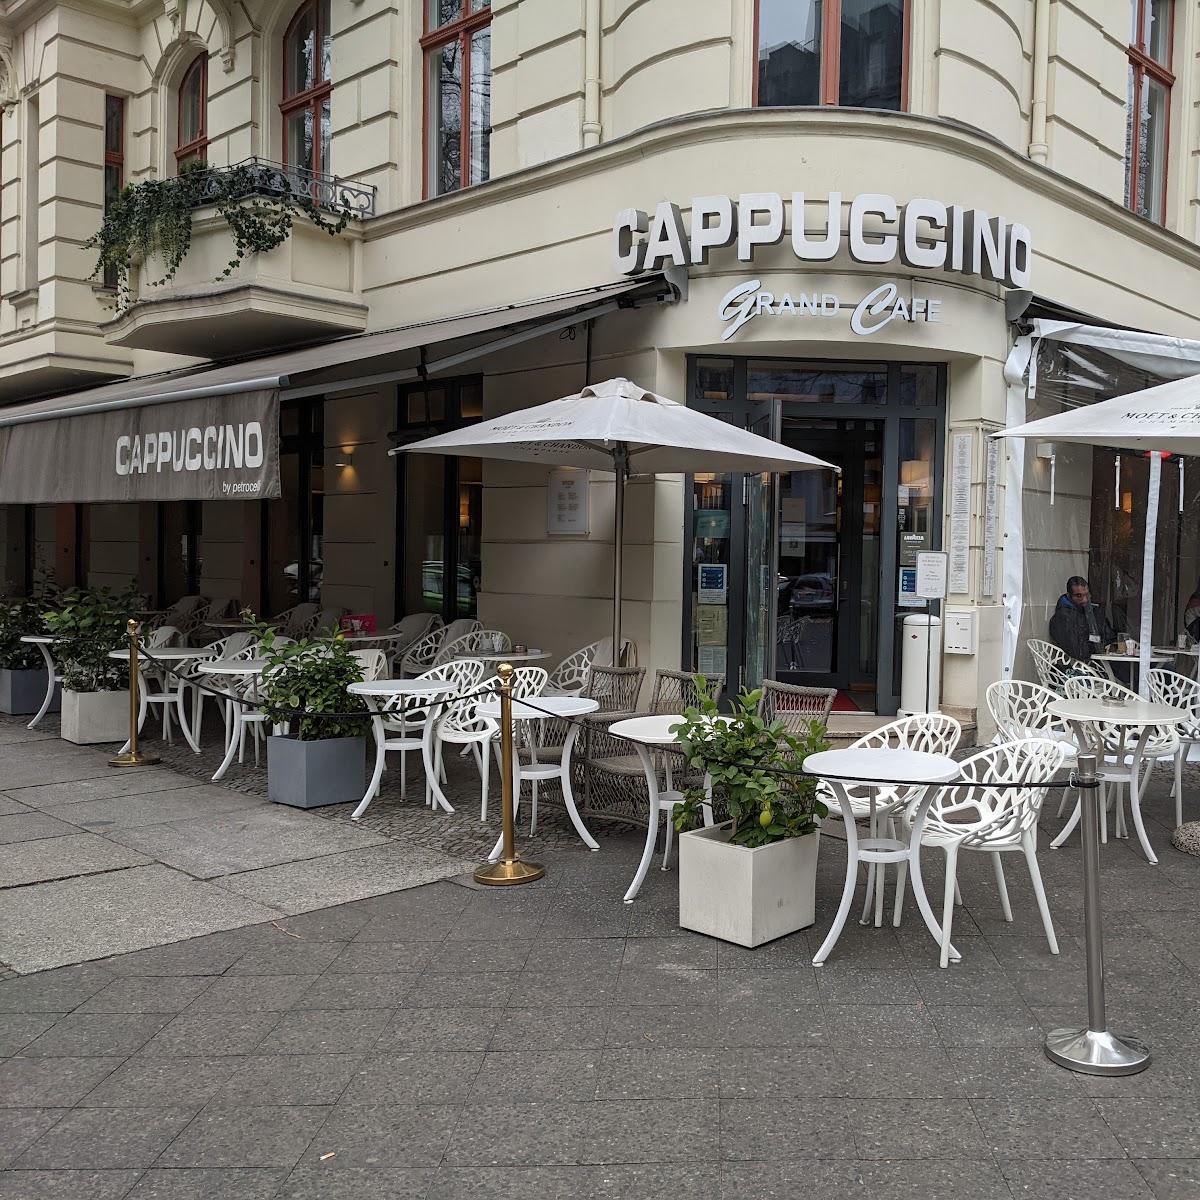 Restaurant "Cappuccino Grand Café by petrocelli" in Berlin